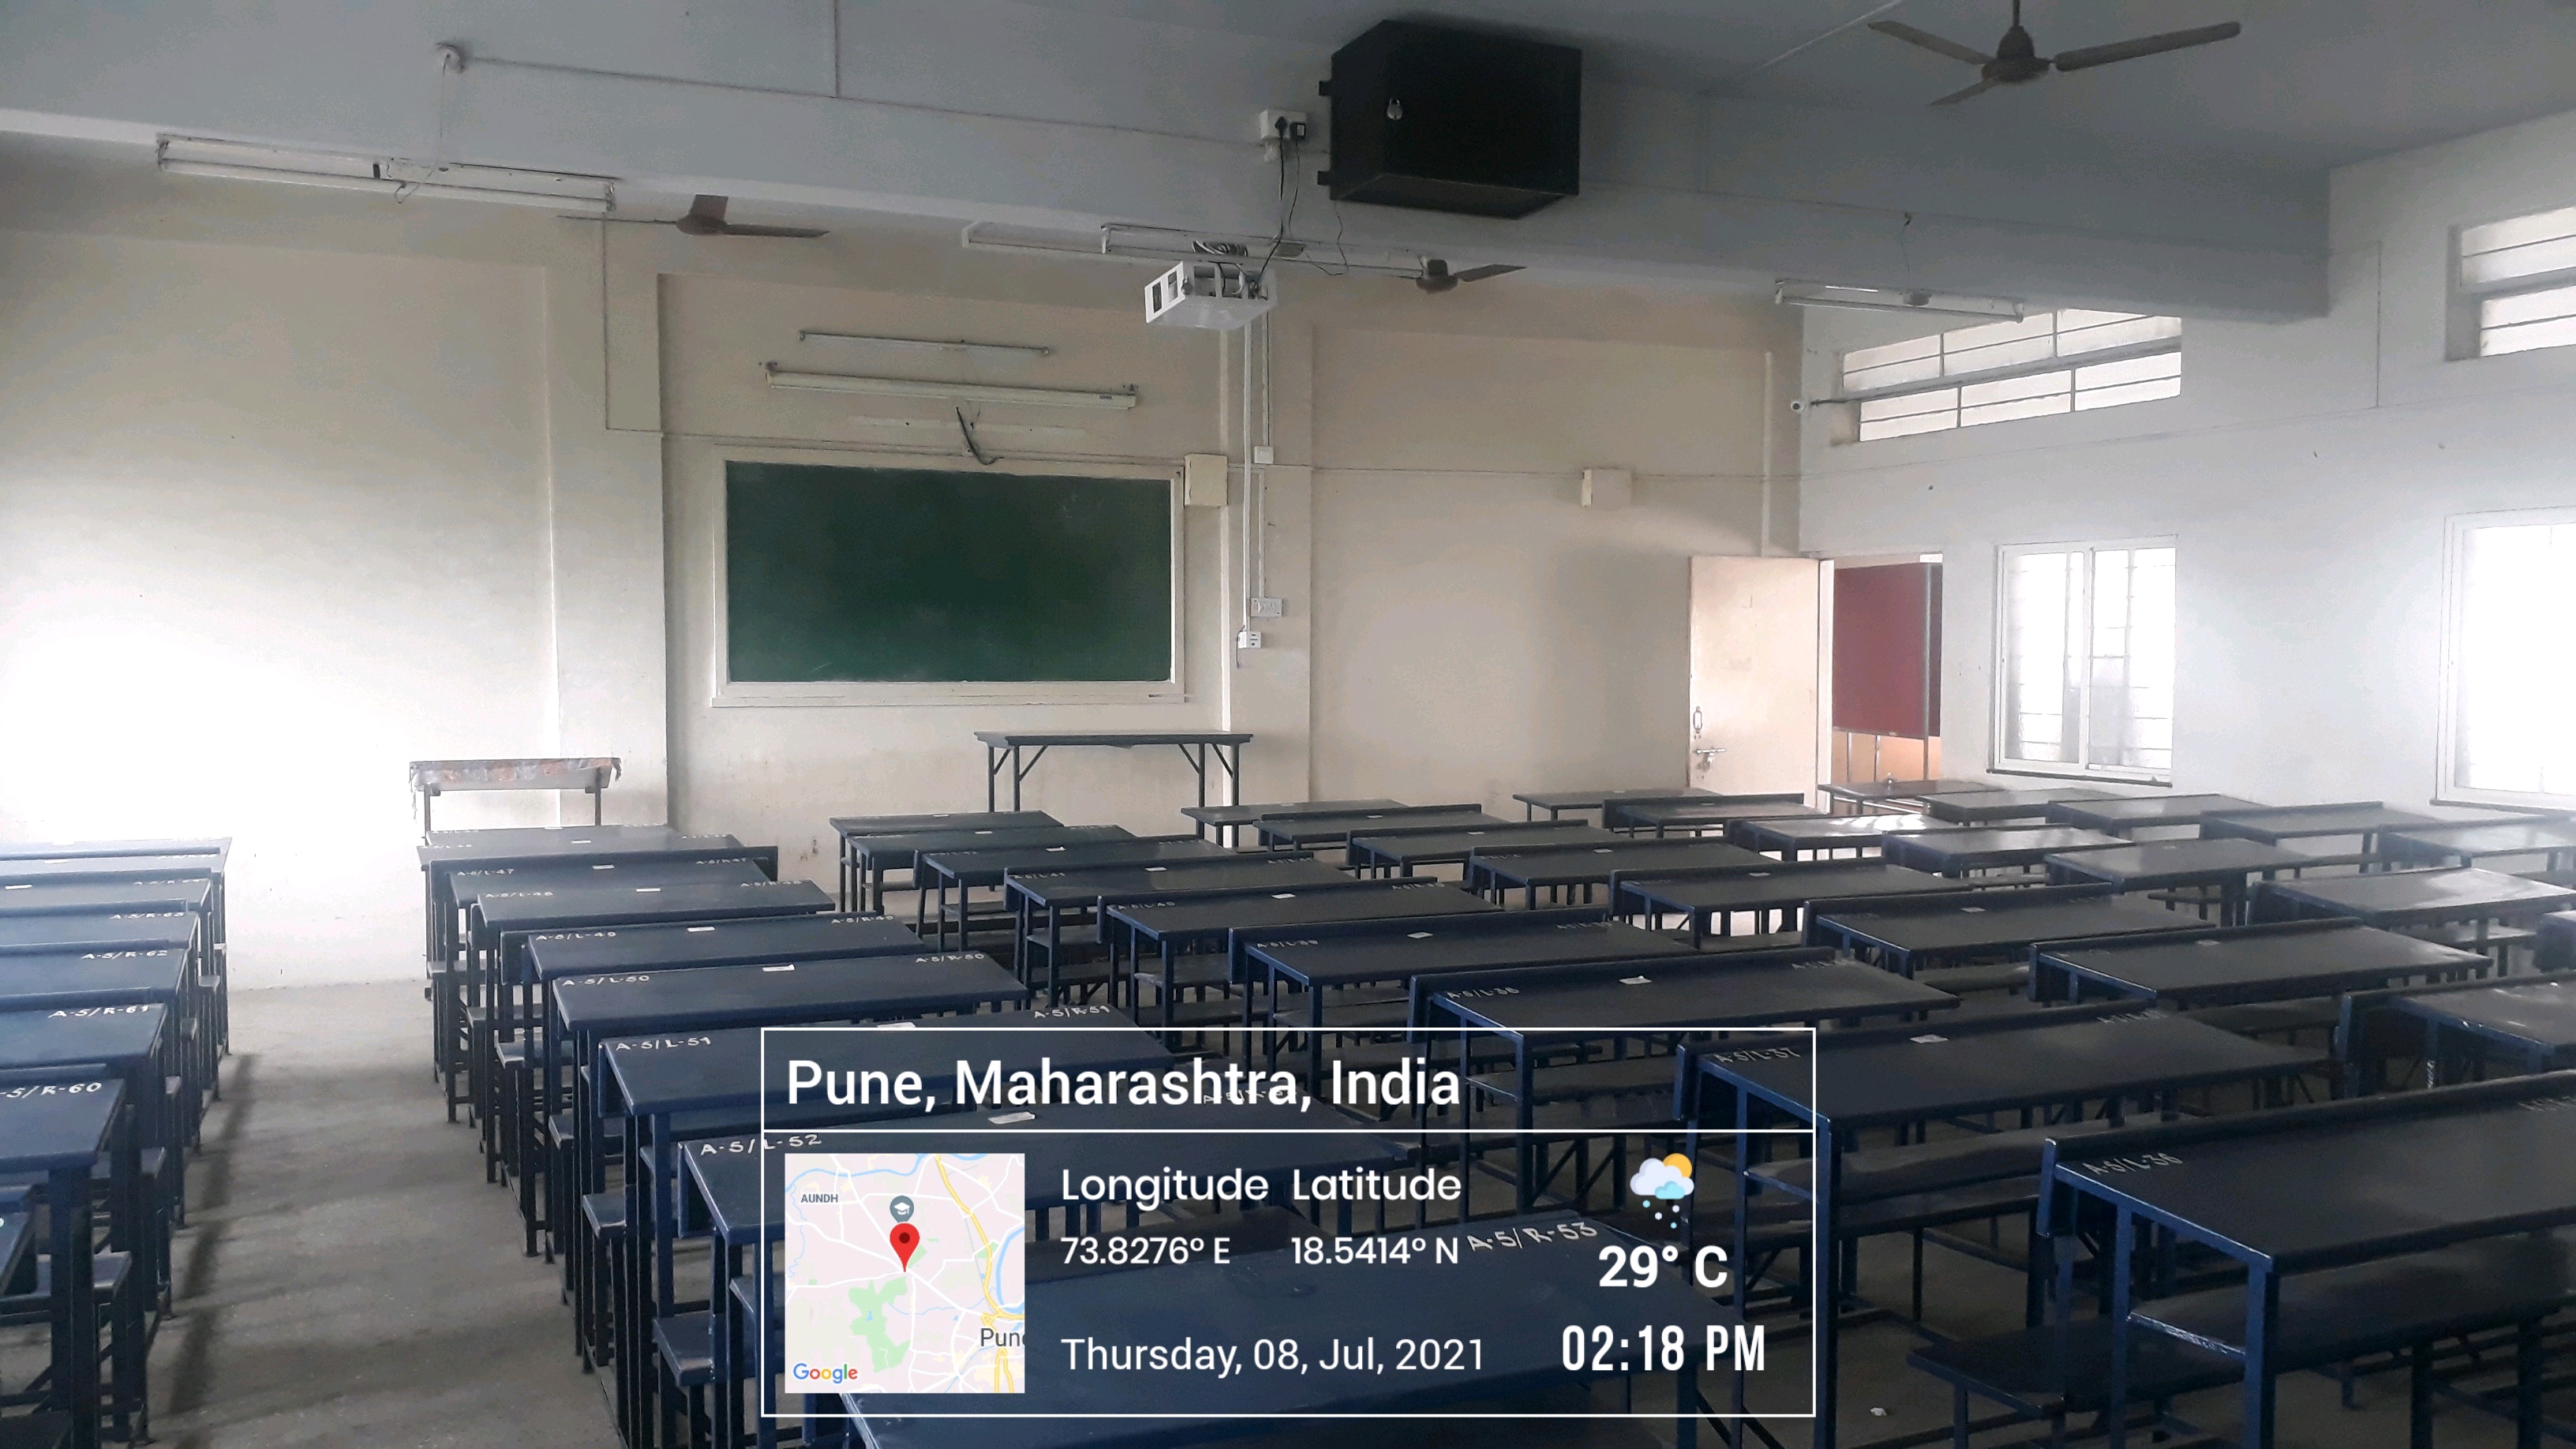 Classroom 1